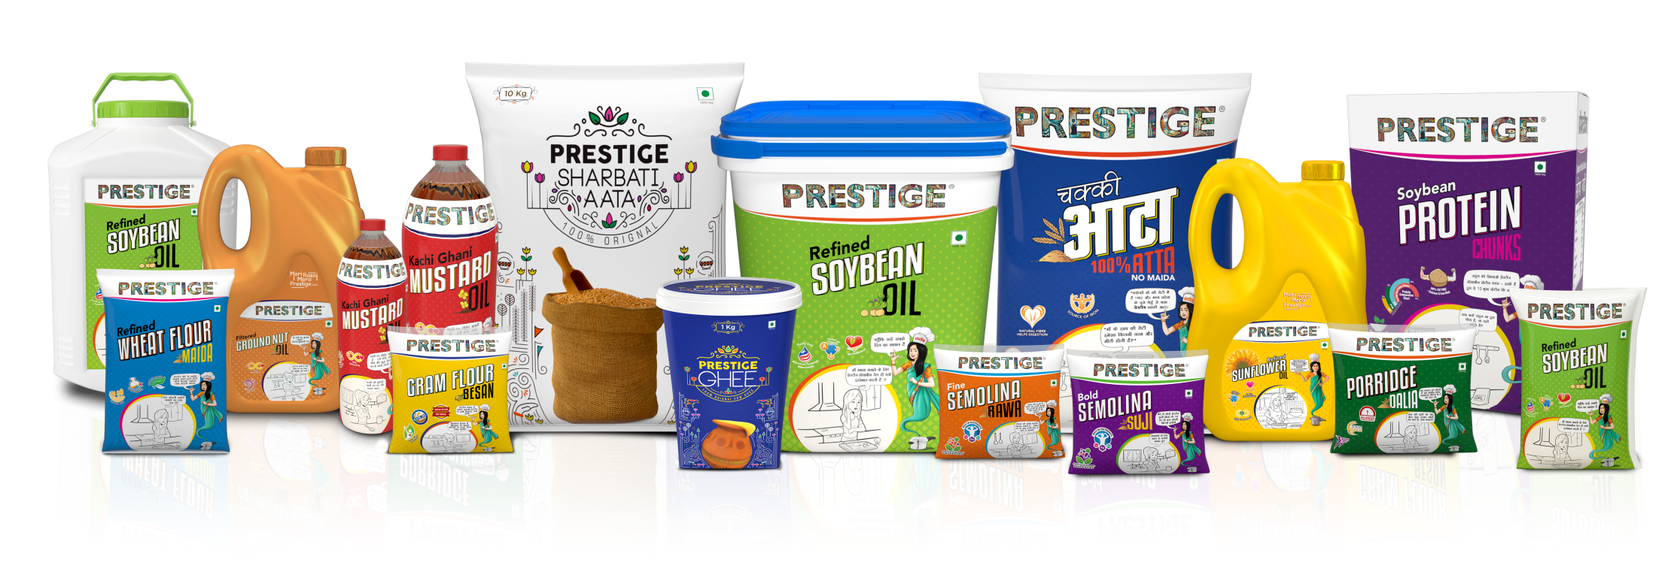 Complete Range of Prestige Products